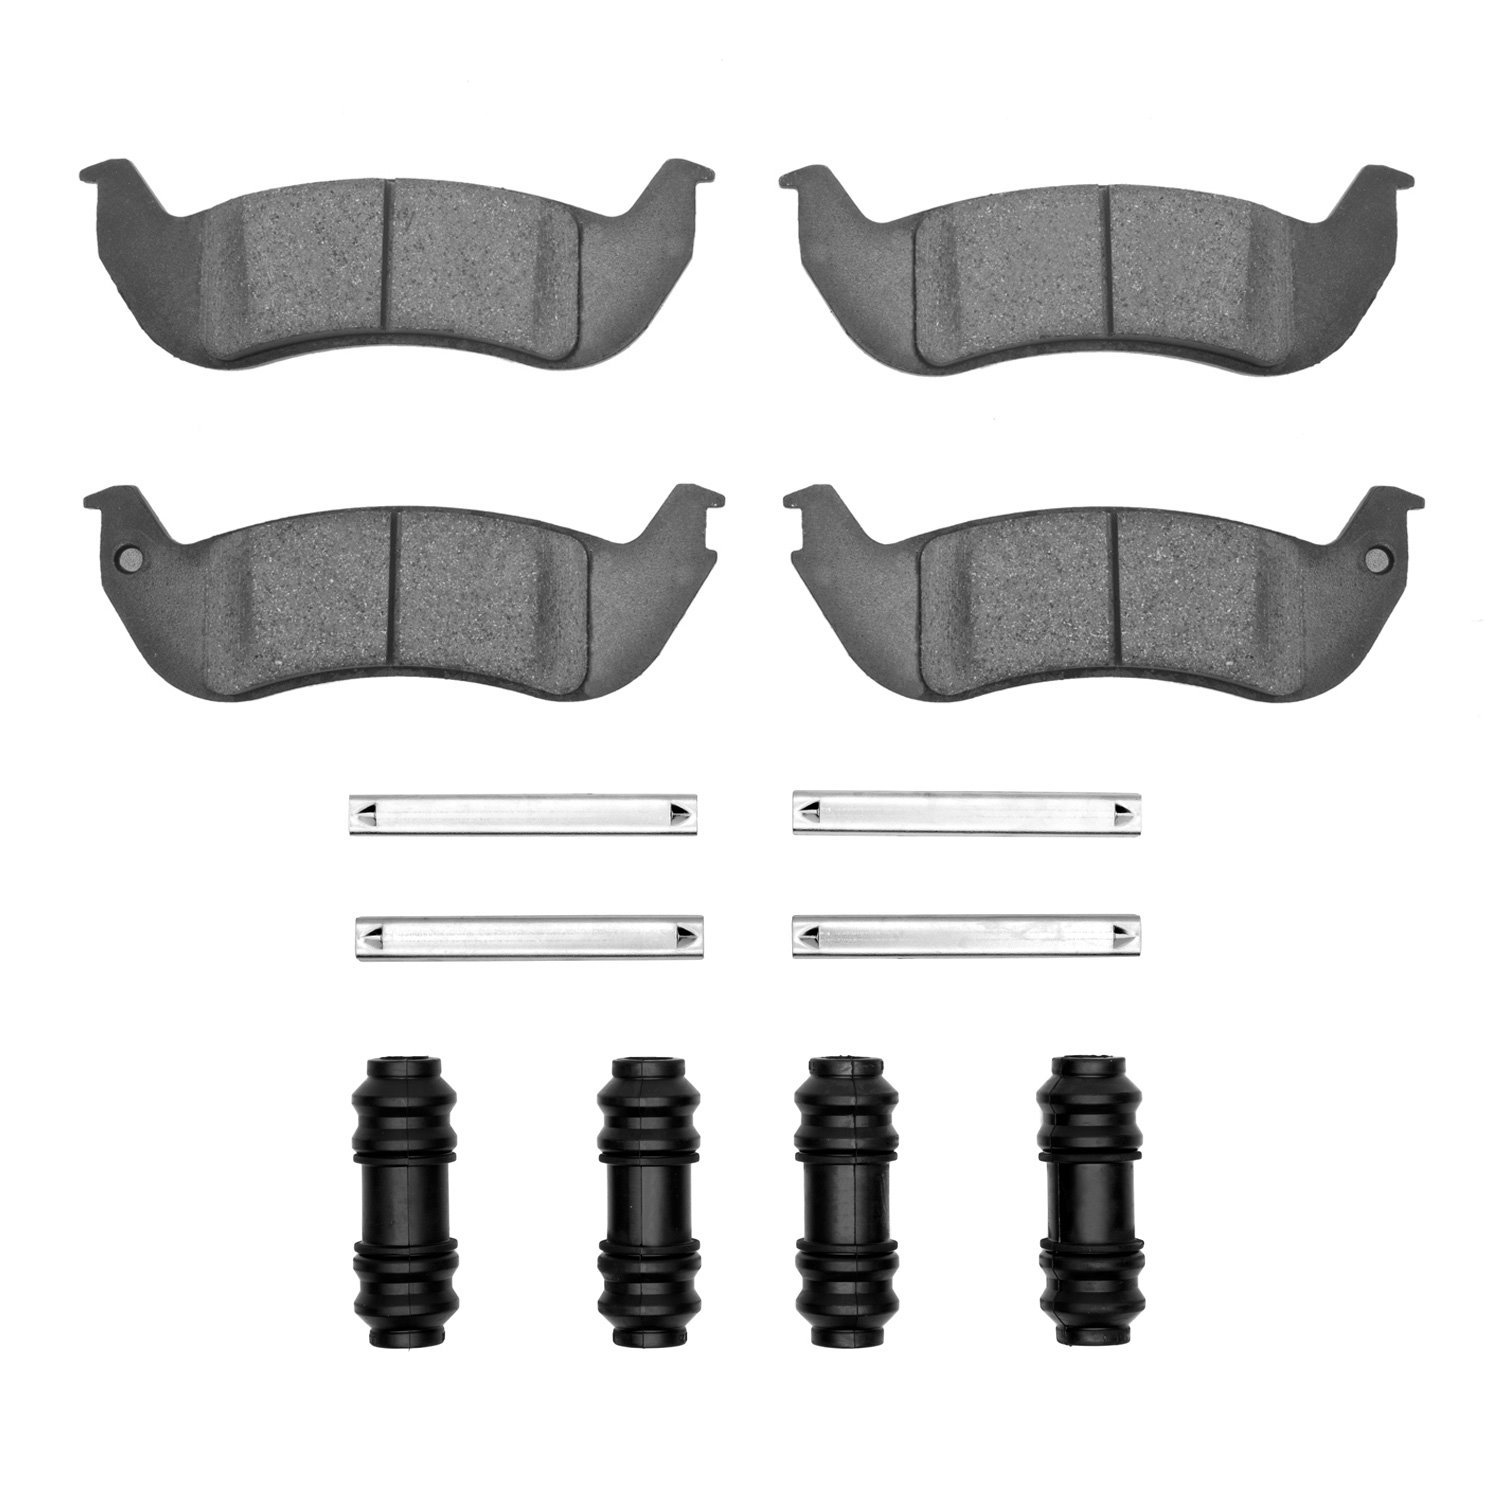 1551-0932-01 5000 Advanced Ceramic Brake Pads & Hardware Kit, 2003-2011 Ford/Lincoln/Mercury/Mazda, Position: Rear